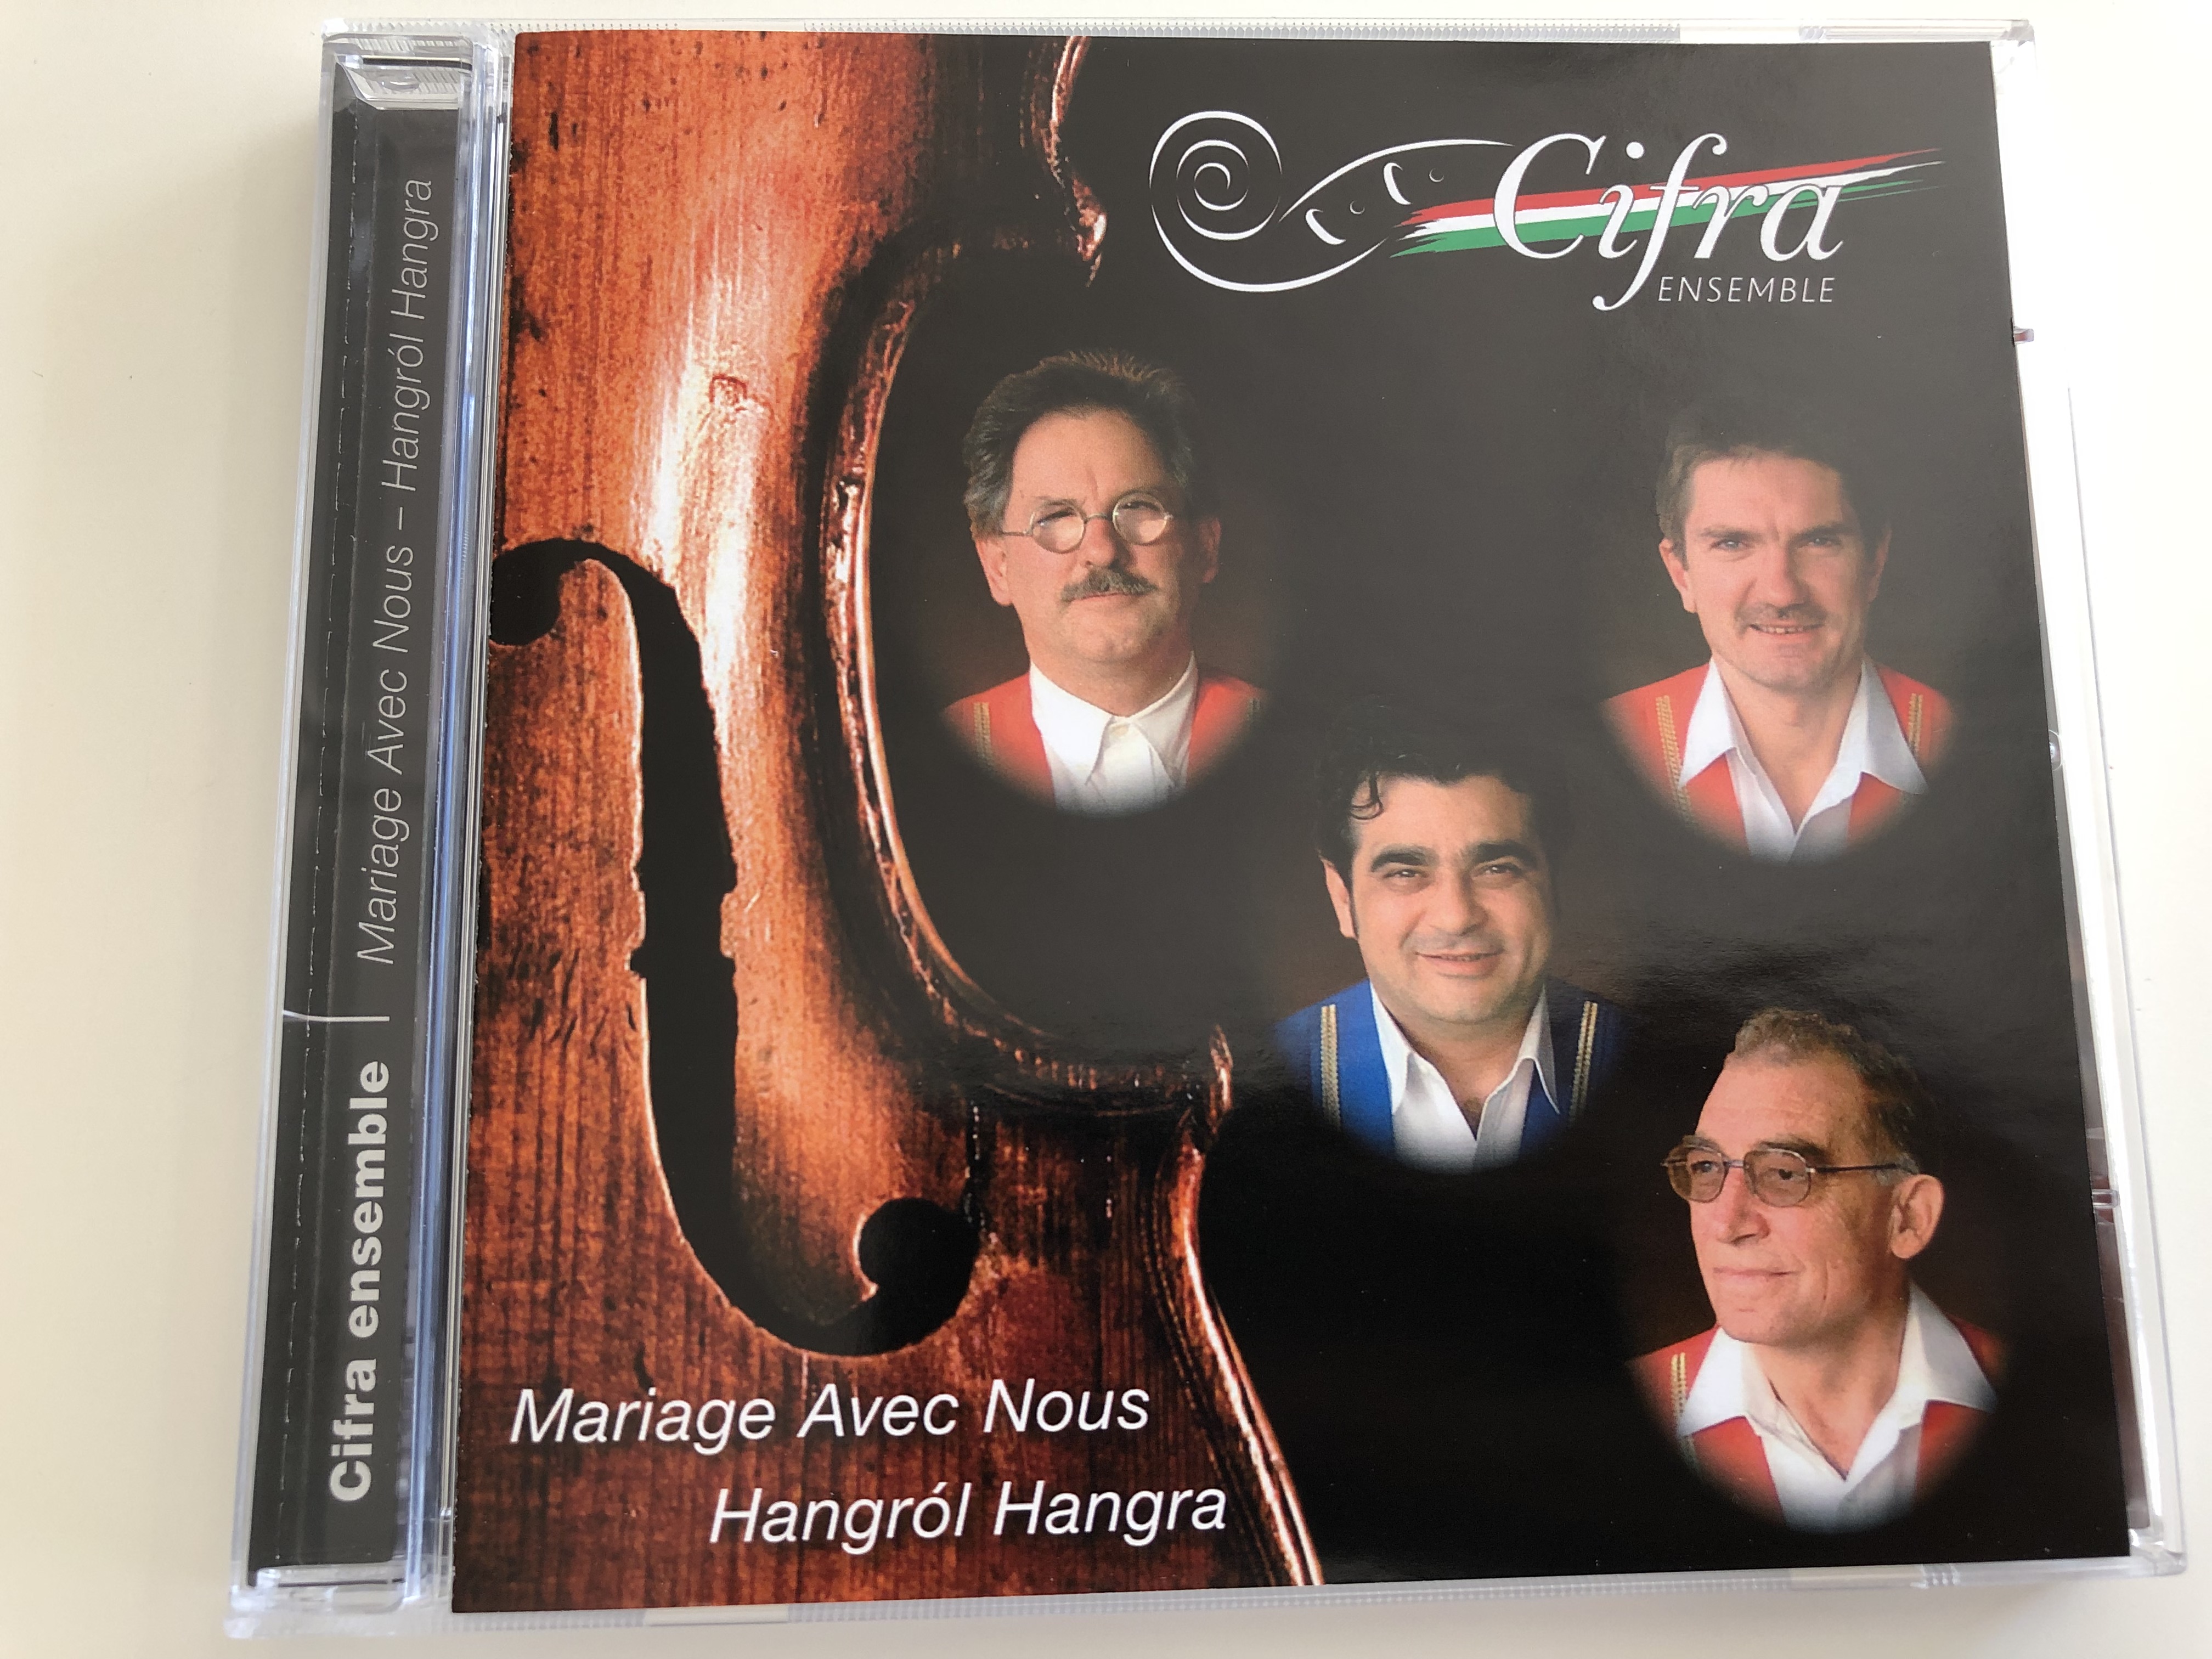 cifra-ensemble-mariage-avec-nous-hangr-l-hangra-audio-cd-2006-membran-music-1-.jpg